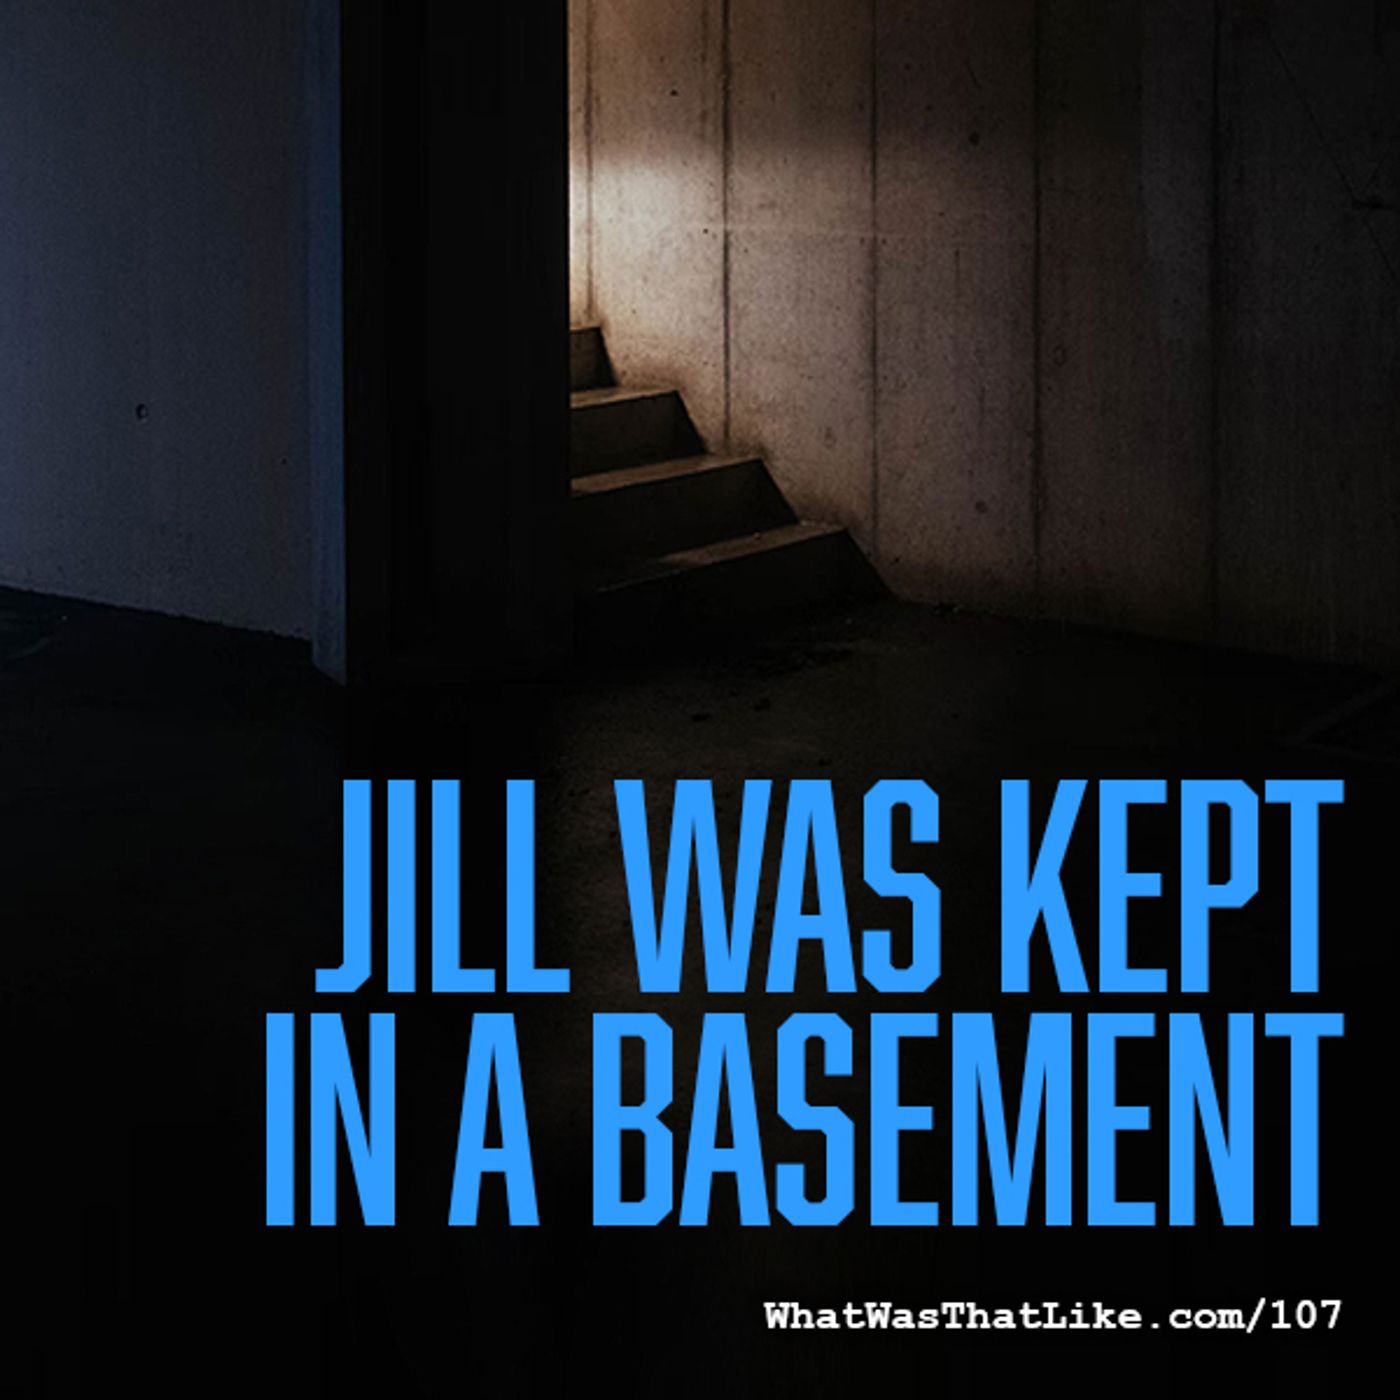 Jill was kept in a basement by What Was That Like